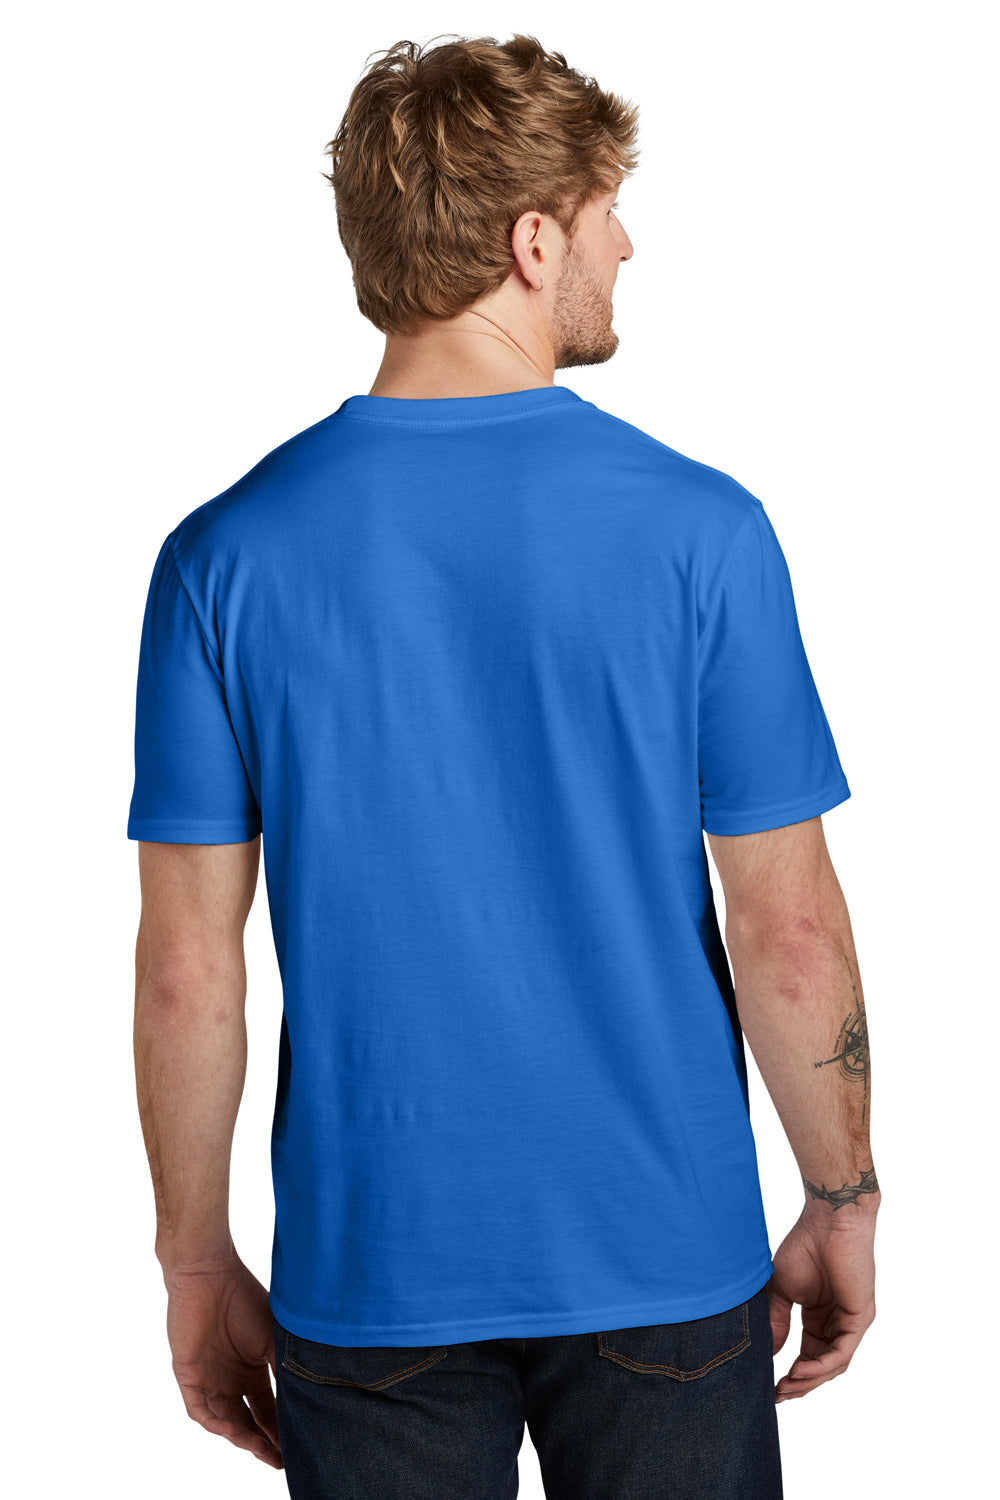 Volunteer Knitwear VL45 Daily Short Sleeve Crewneck T-Shirt True Royal Blue Back